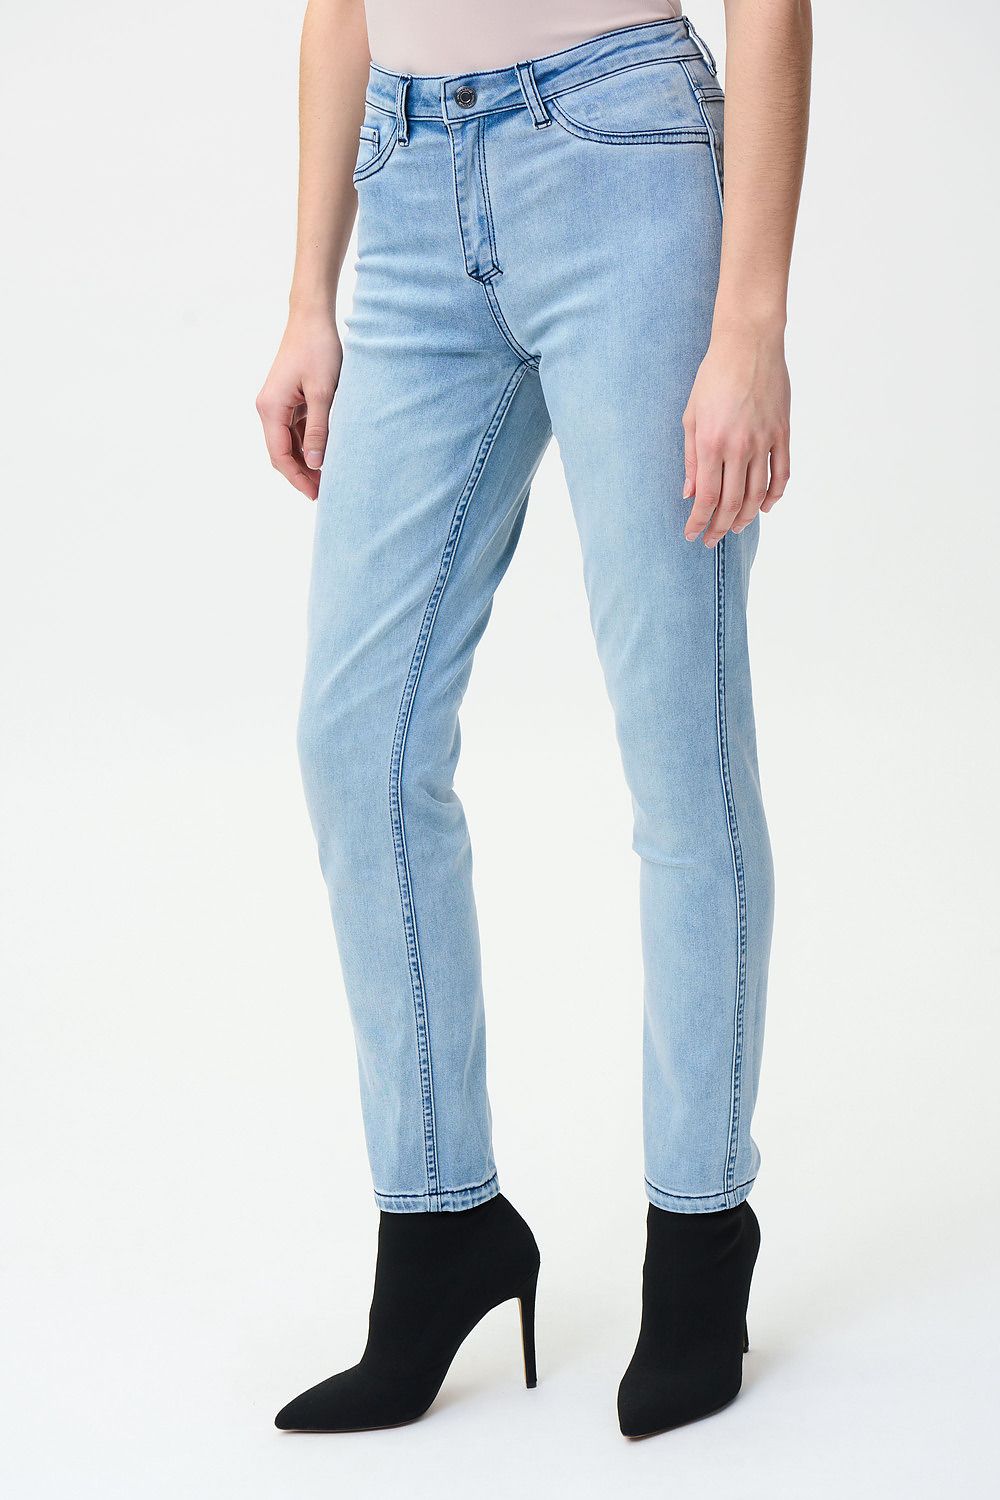 Joseph Ribkoff Reversible Paisley Printed Jeans Style 224935. Blue/multi